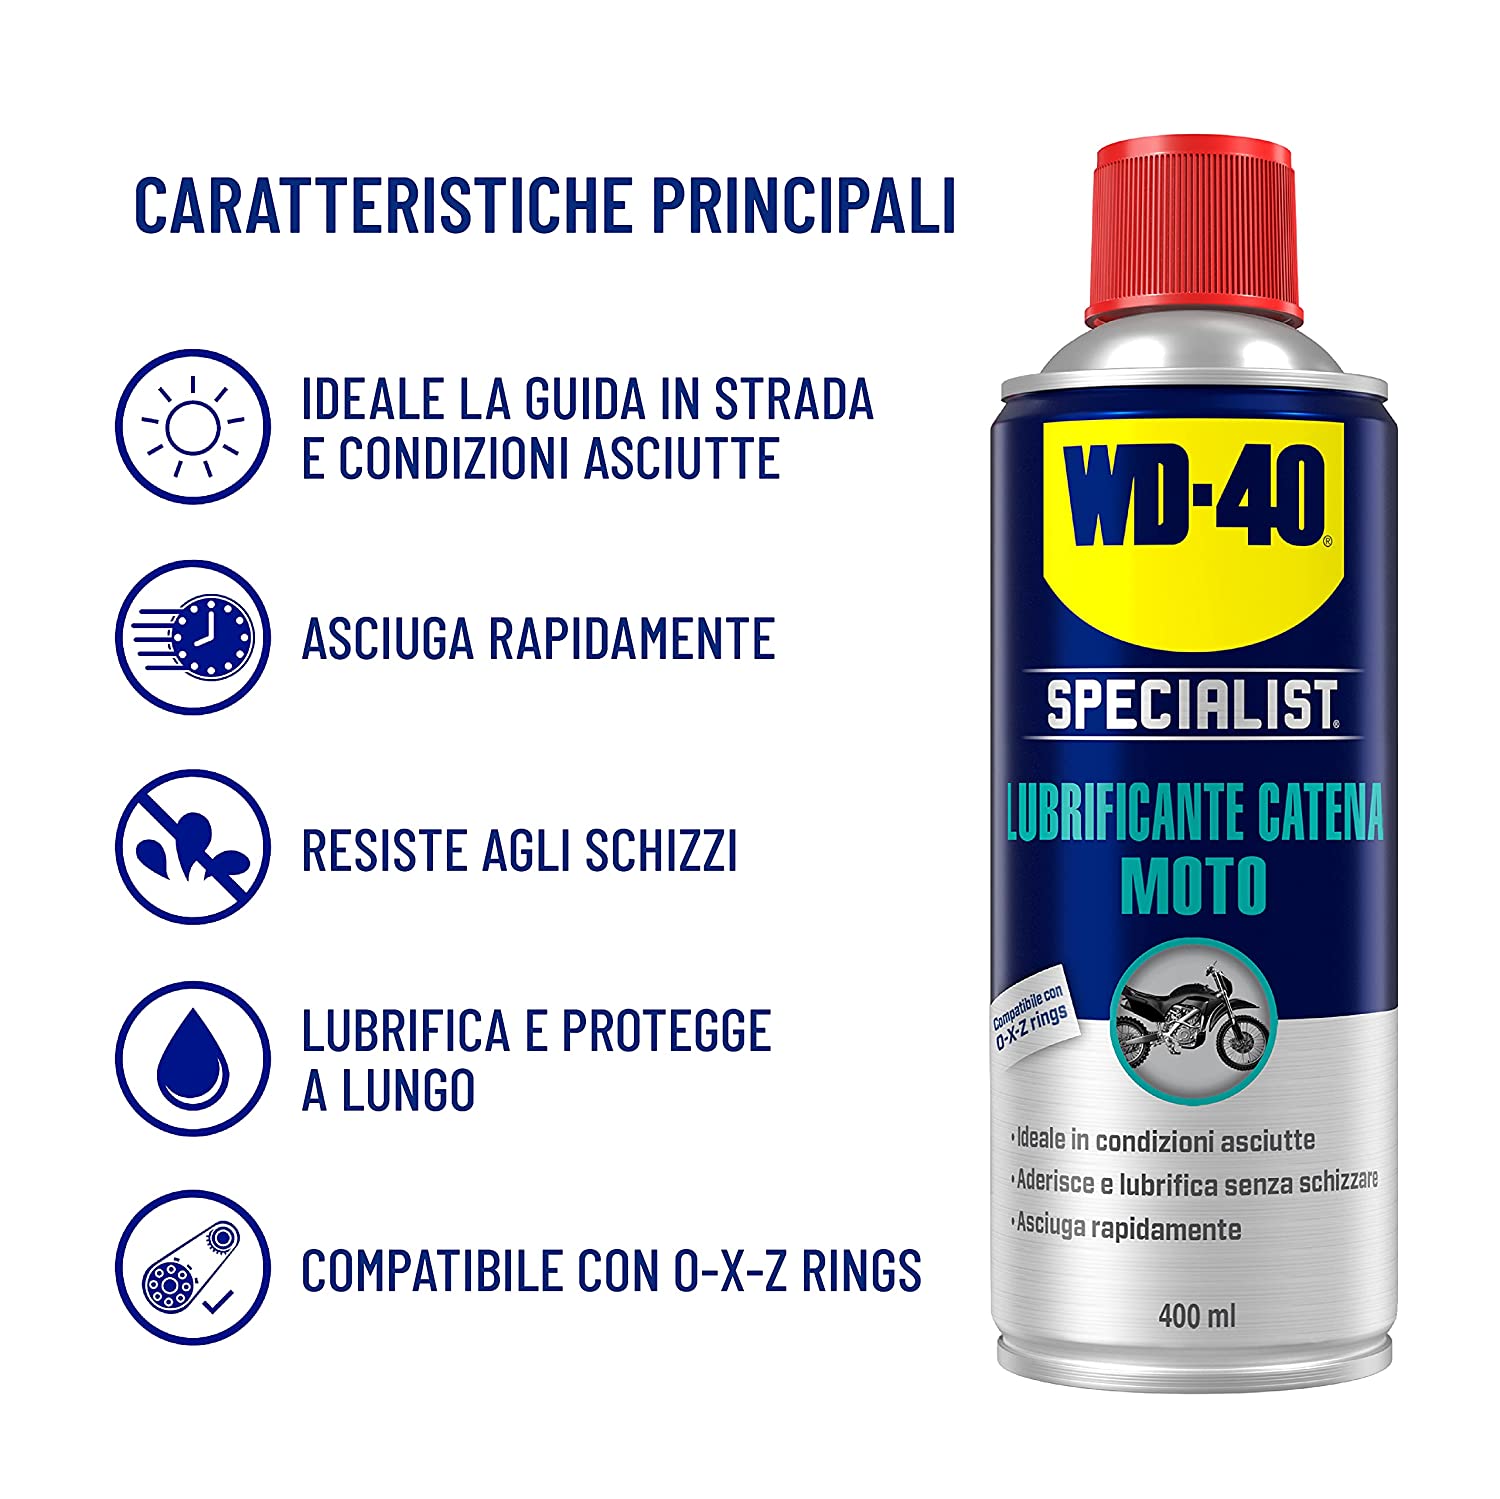 Lubrificante spray catena moto WD-40 Specialist 400 ml - Cod. 39074/46 -  ToolShop Italia